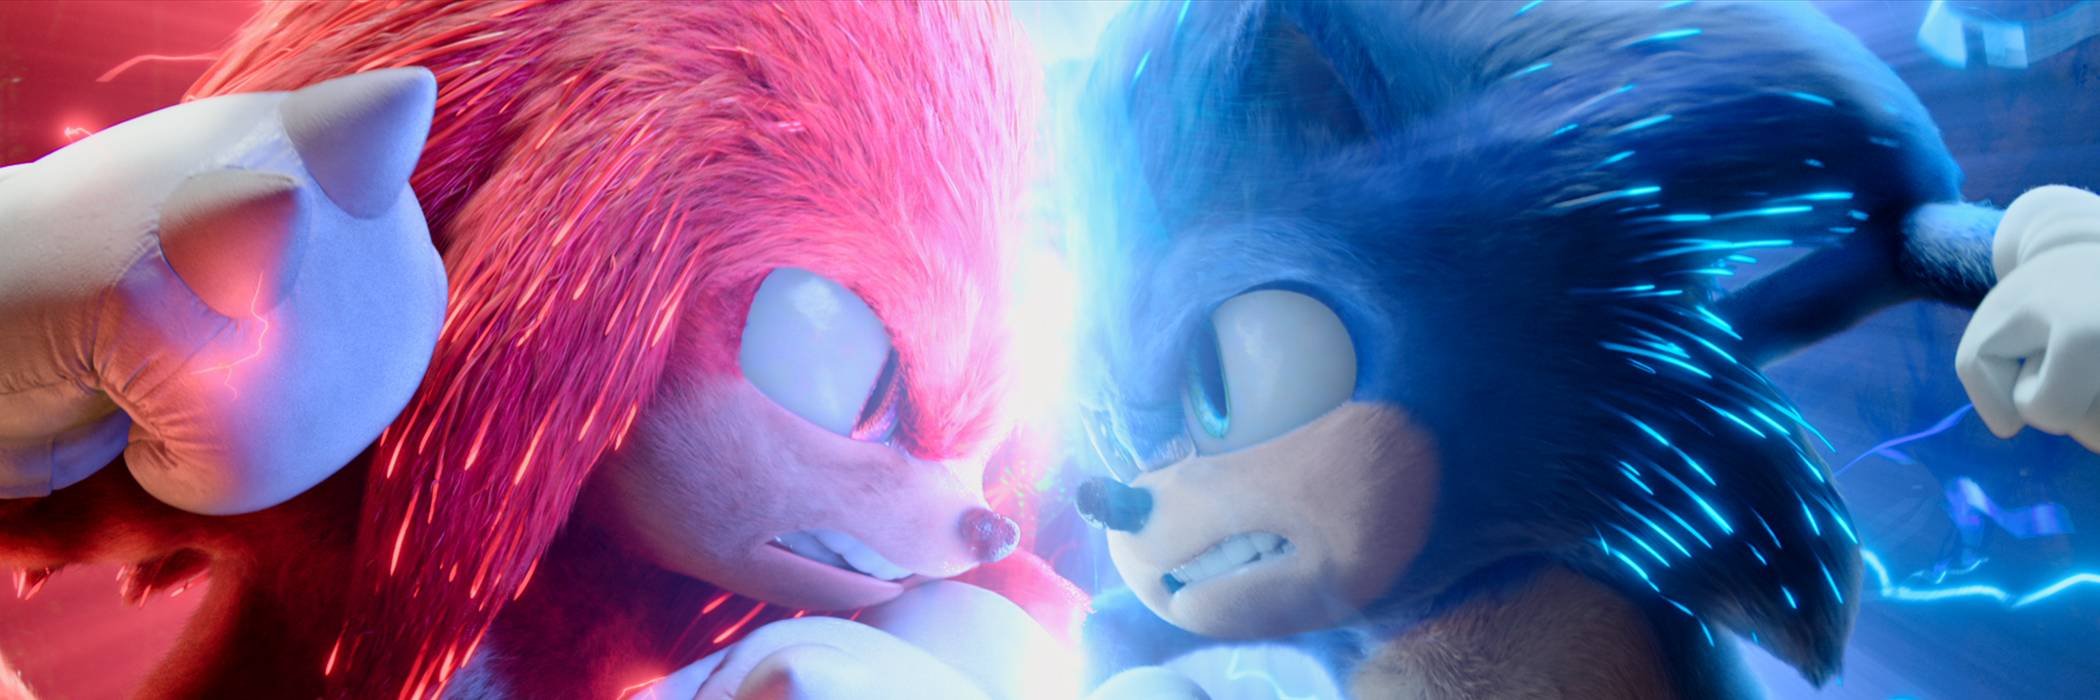 Sonic the Hedgehog 2 - No Spoilers (2022)